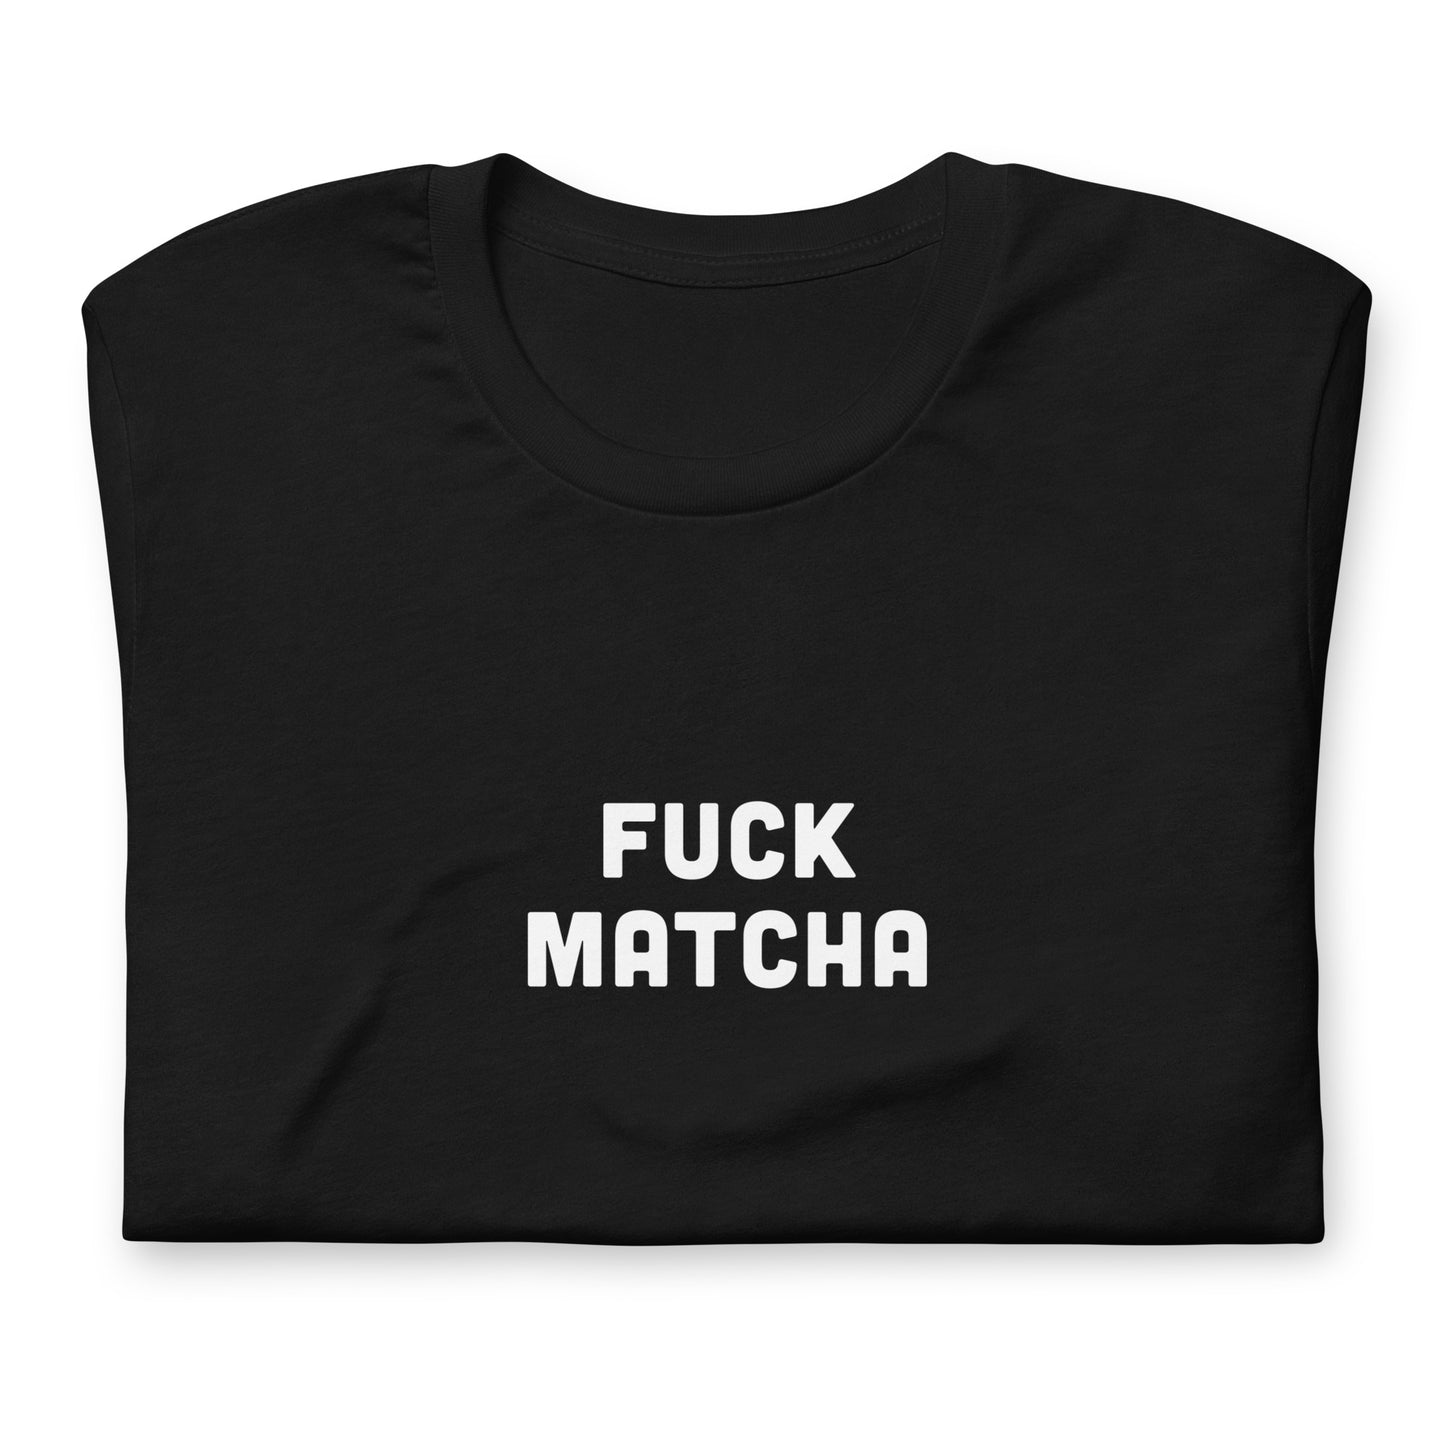 Fuck Matcha T-Shirt Size M Color Black